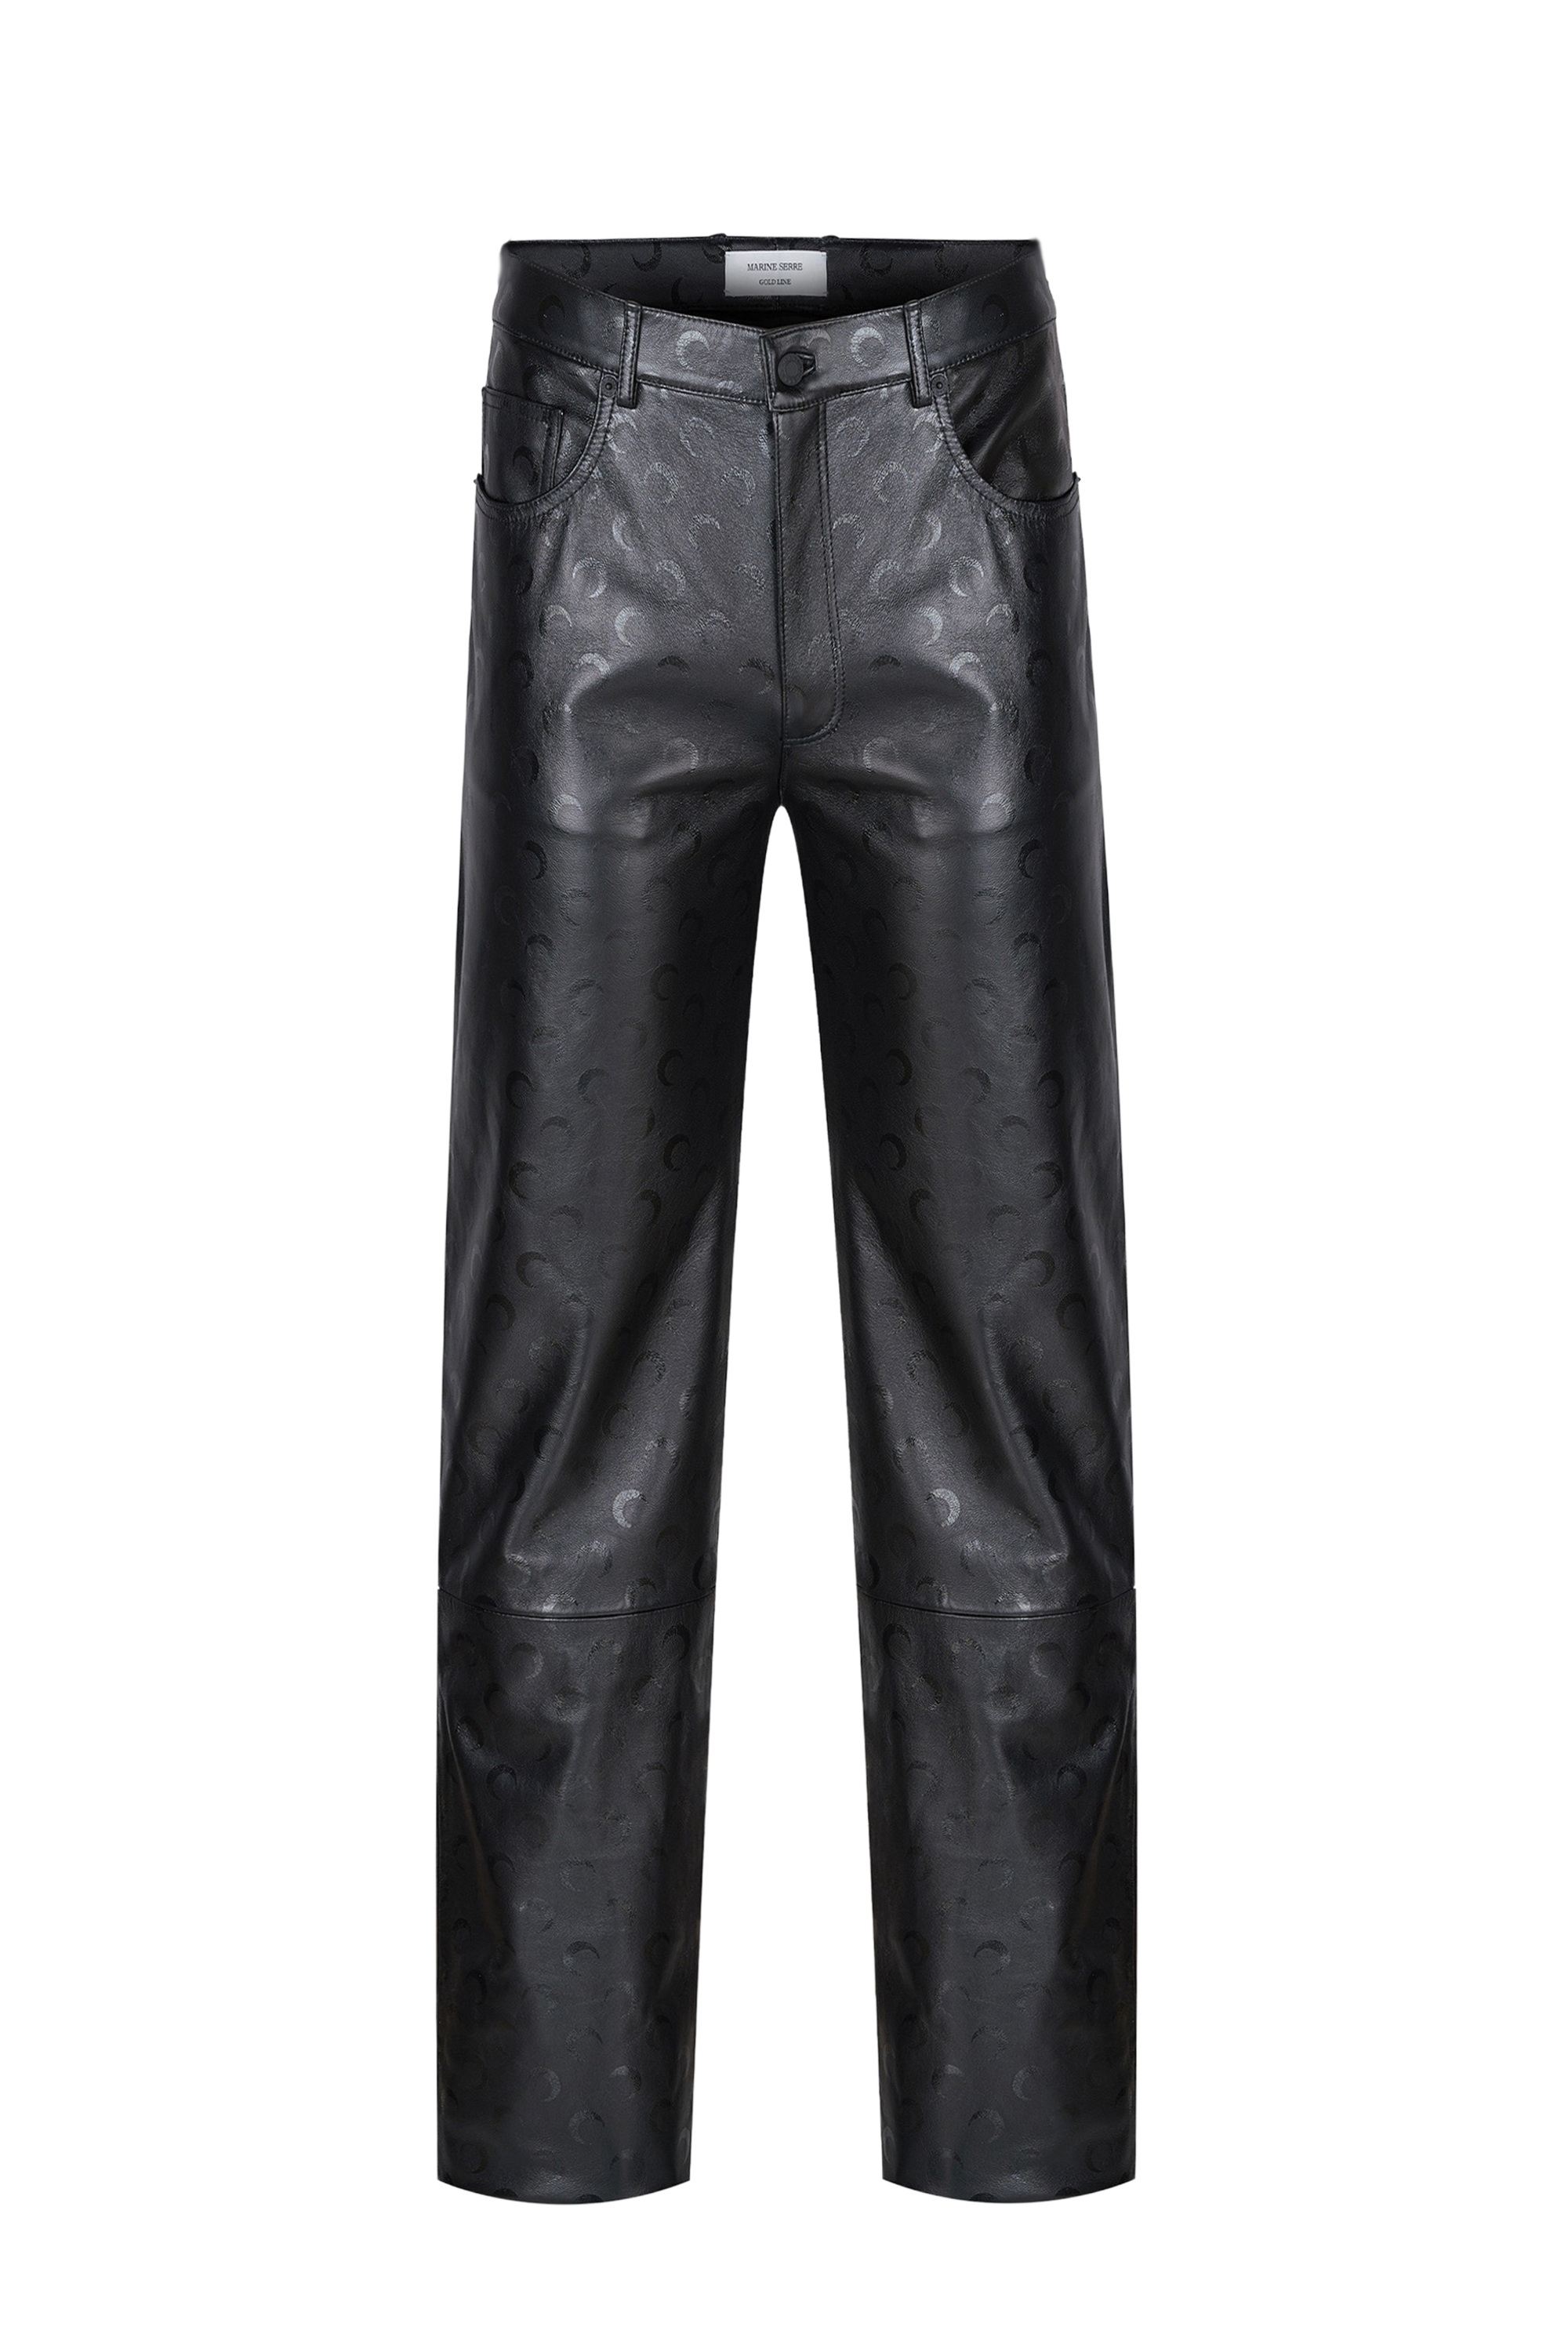 Monogram embossed leather pants - Marine Serre - Men